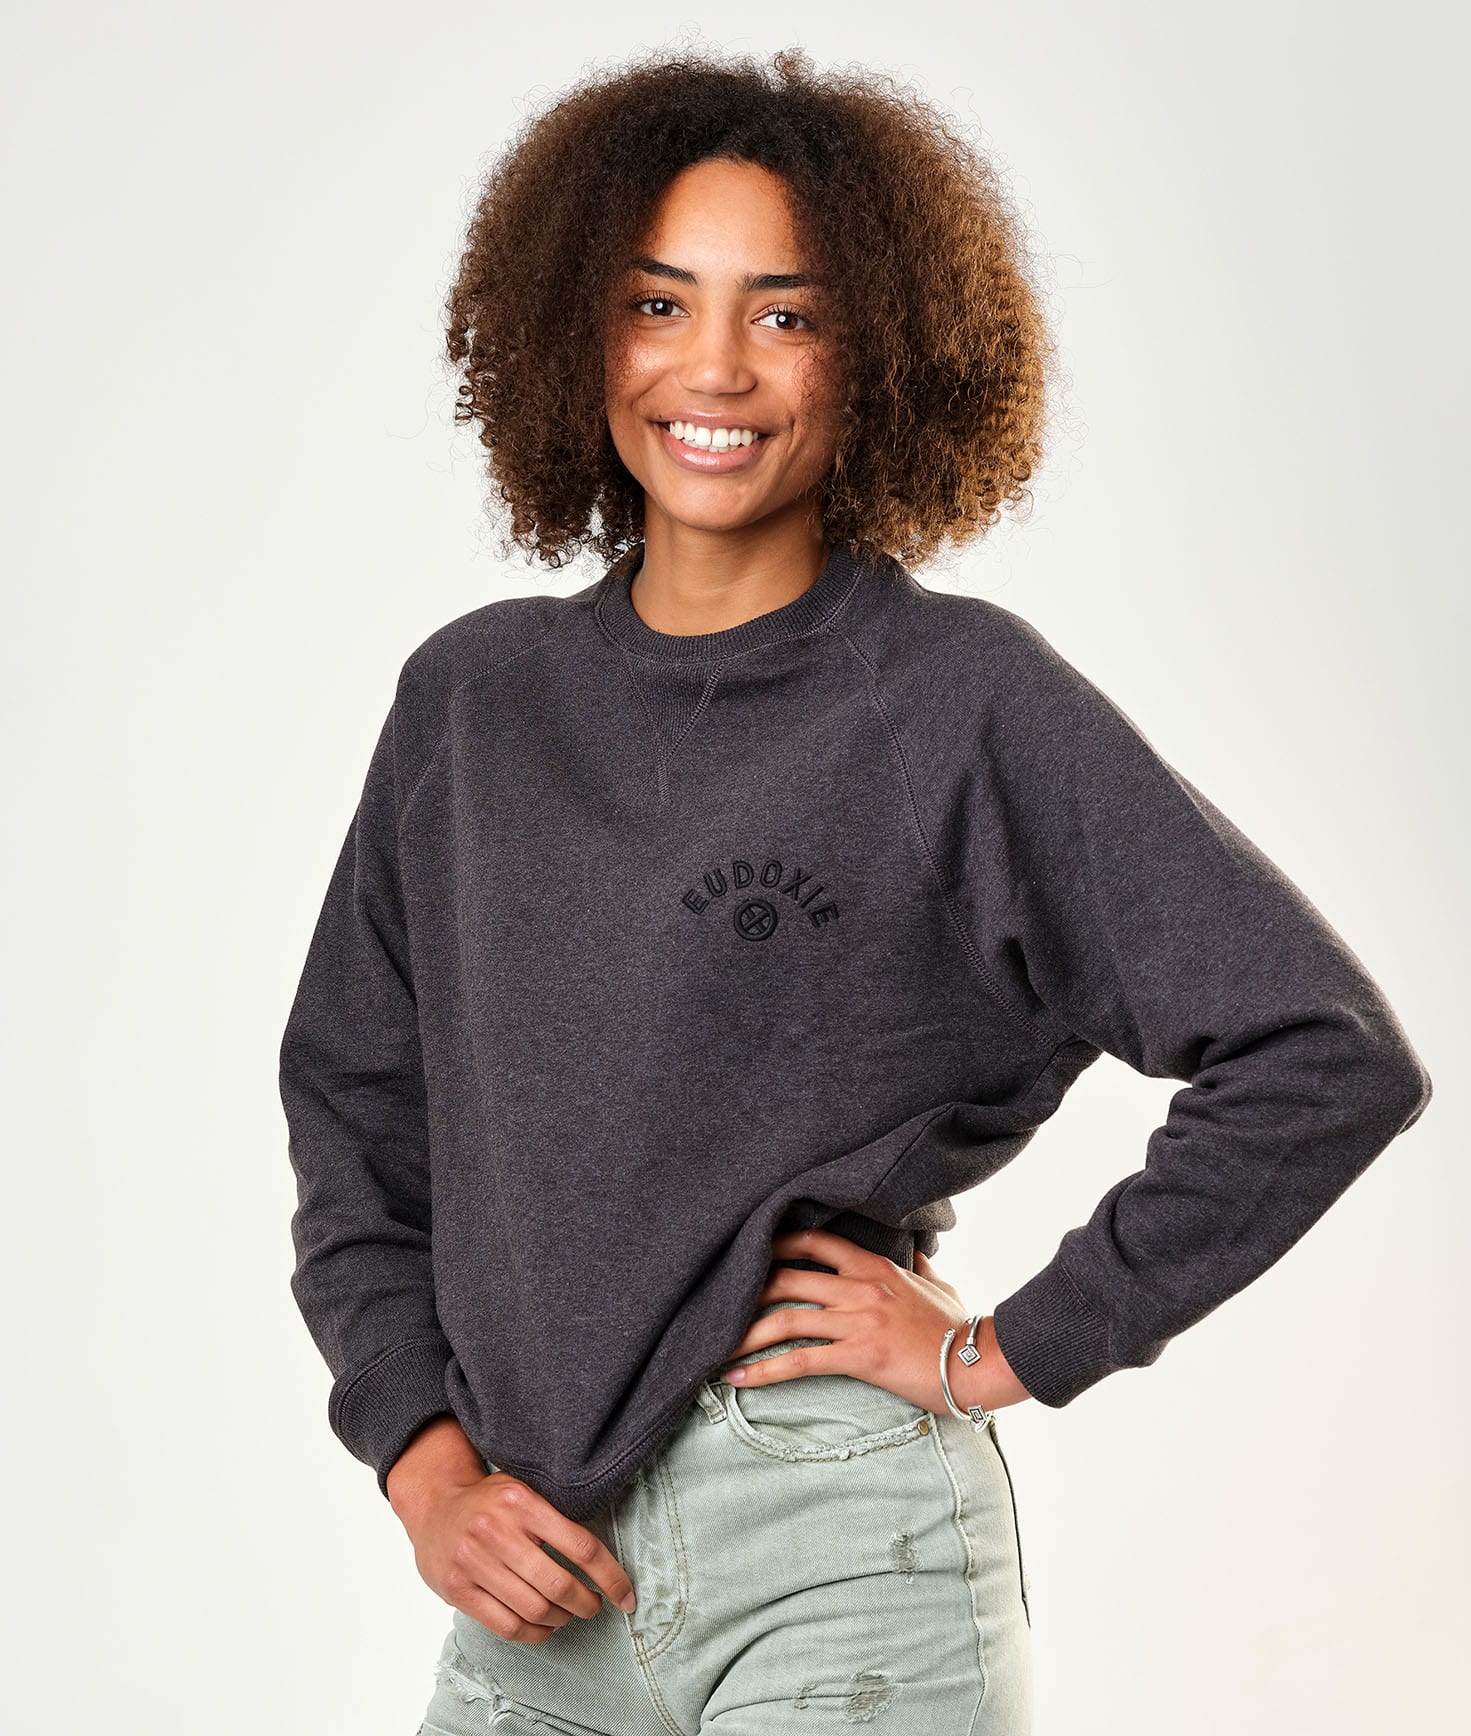 Eudoxie "Bonnie" Embroidered Sweatshirt - Small - Bild 1